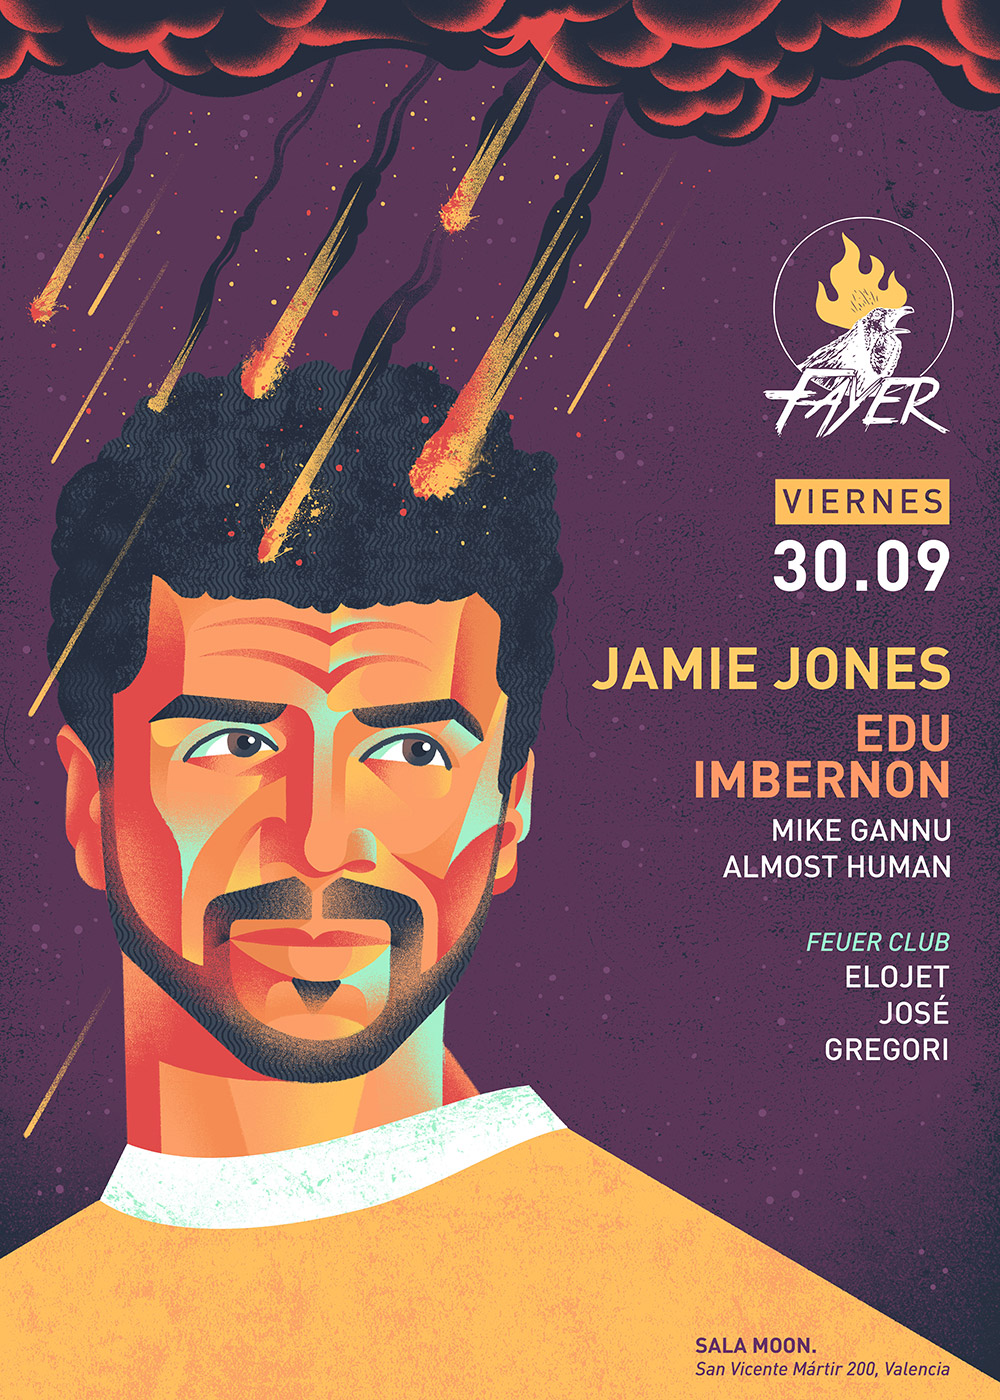 Jamie Jones next friday 30 of september at Moon Valencia with Fayer